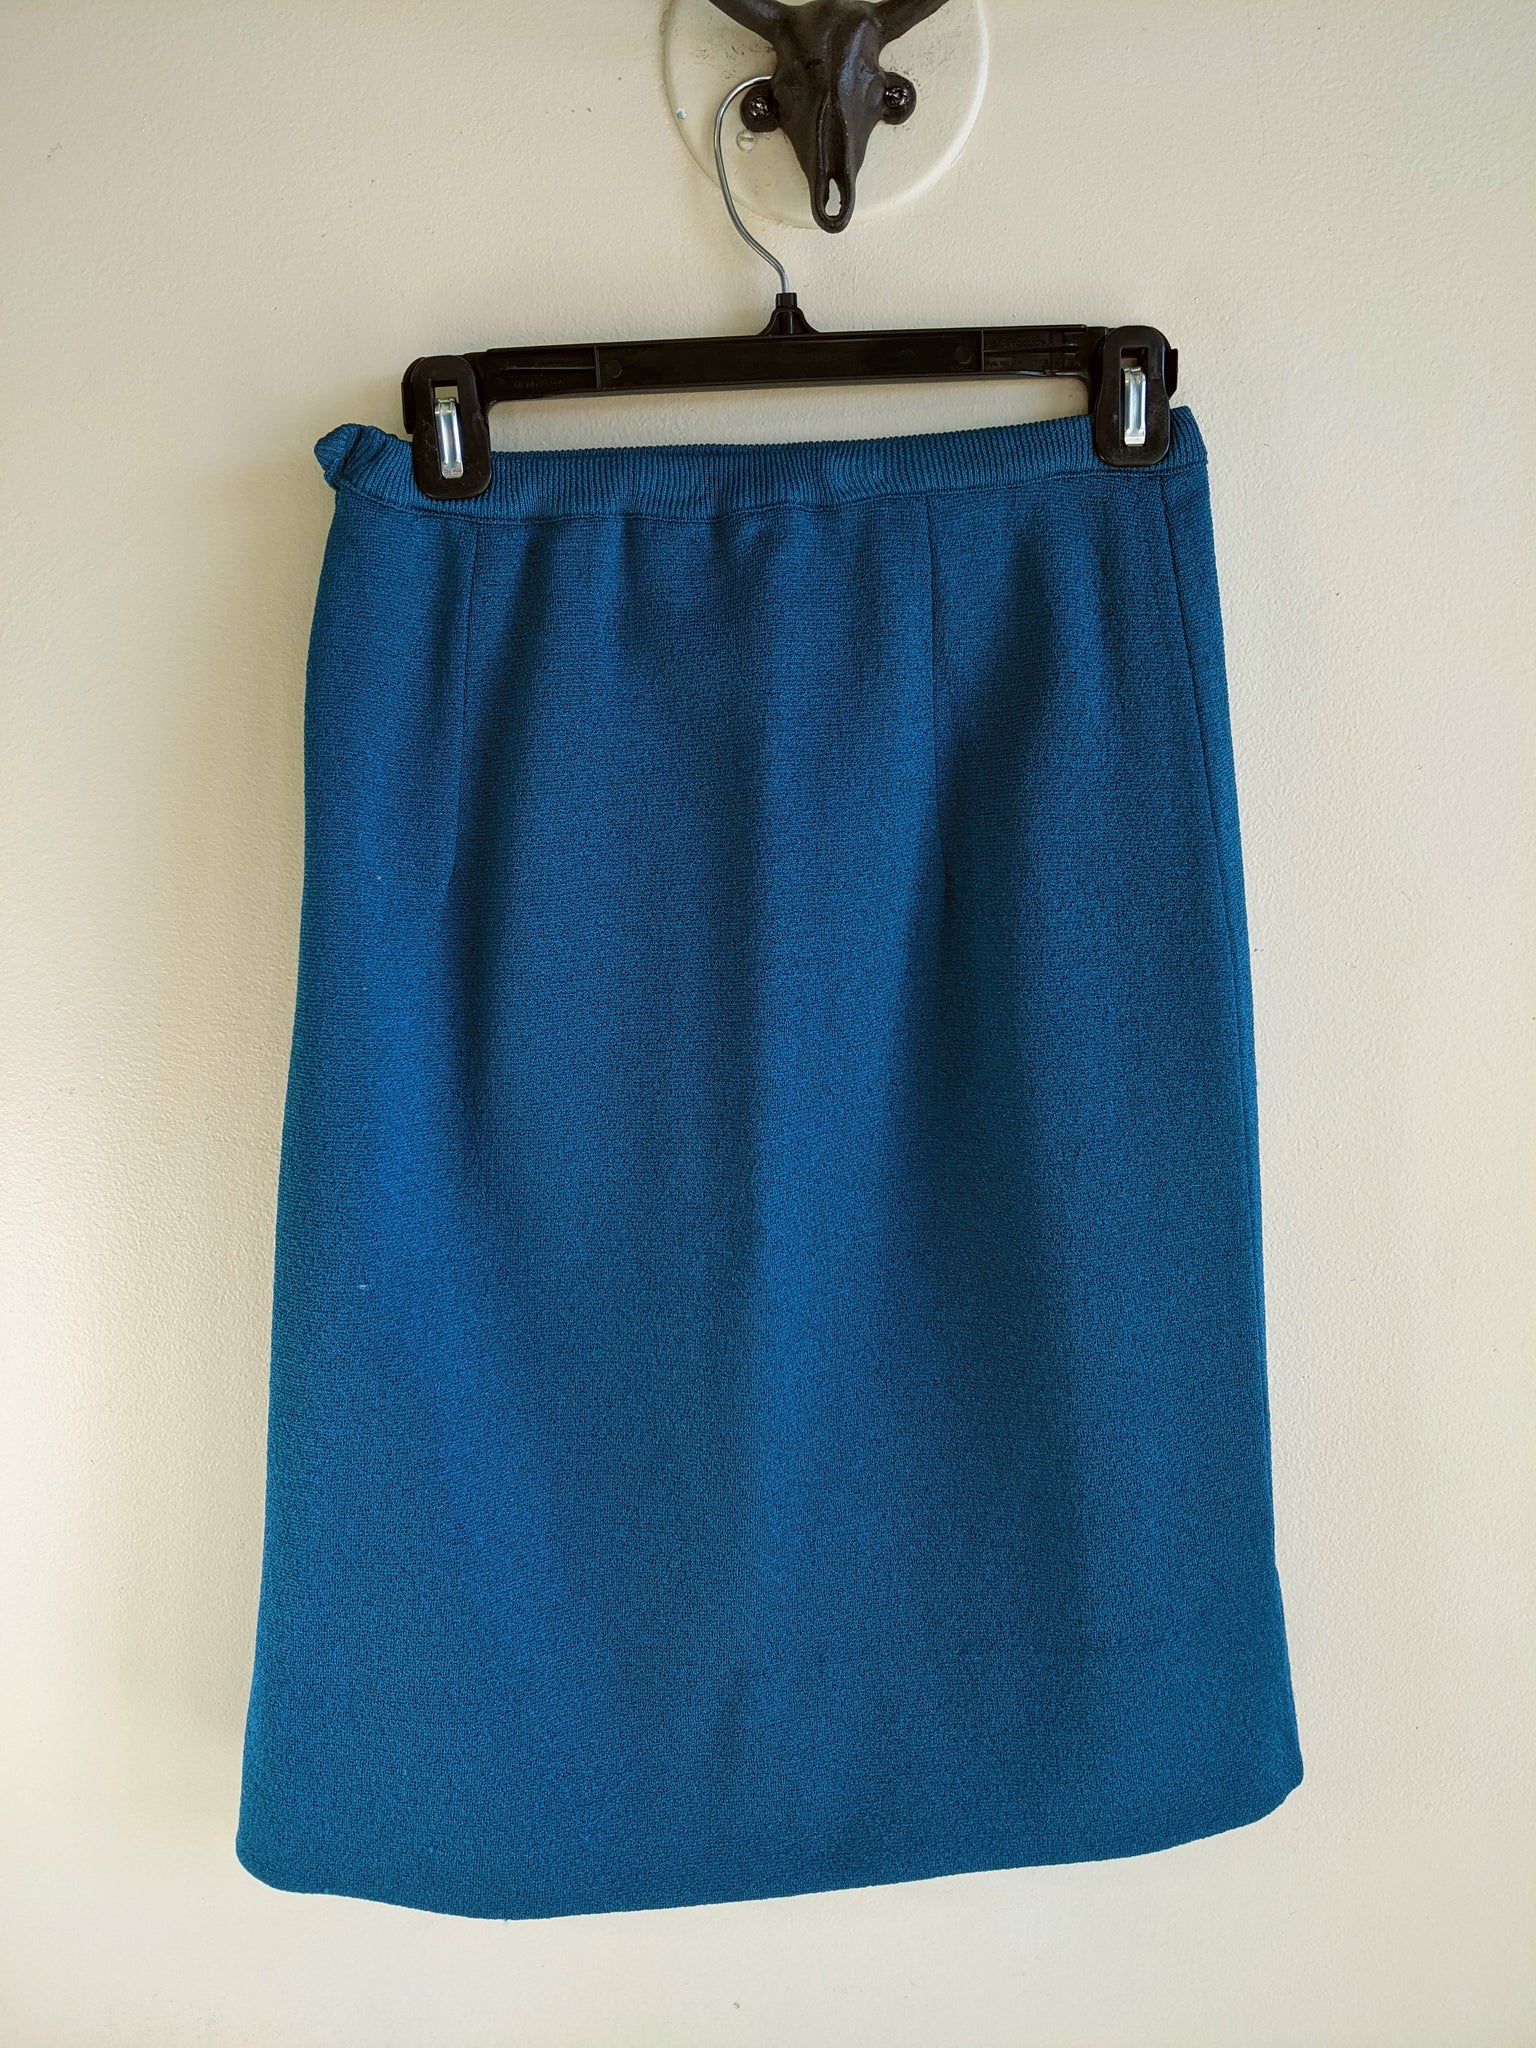 Sapphire Blue Pencil Skirt - M